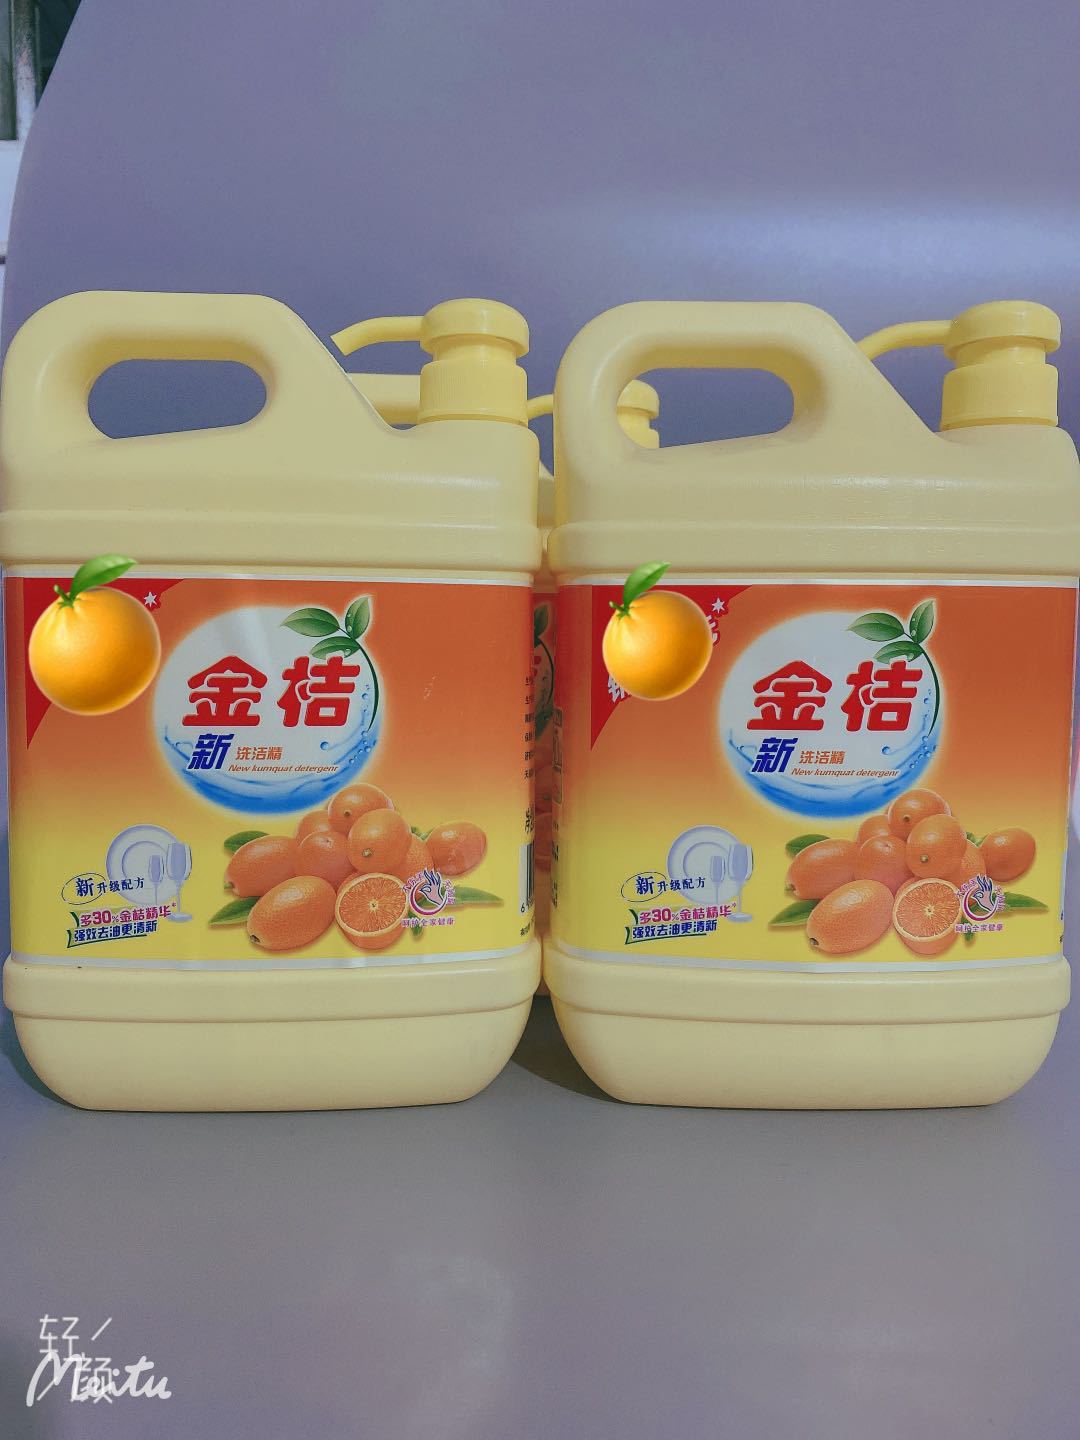 Kumquat Detergent 1.5kg Barrel Press-Type Kitchenware Cleaning Agent Oil Removing Deodorant Soda Activity Gift